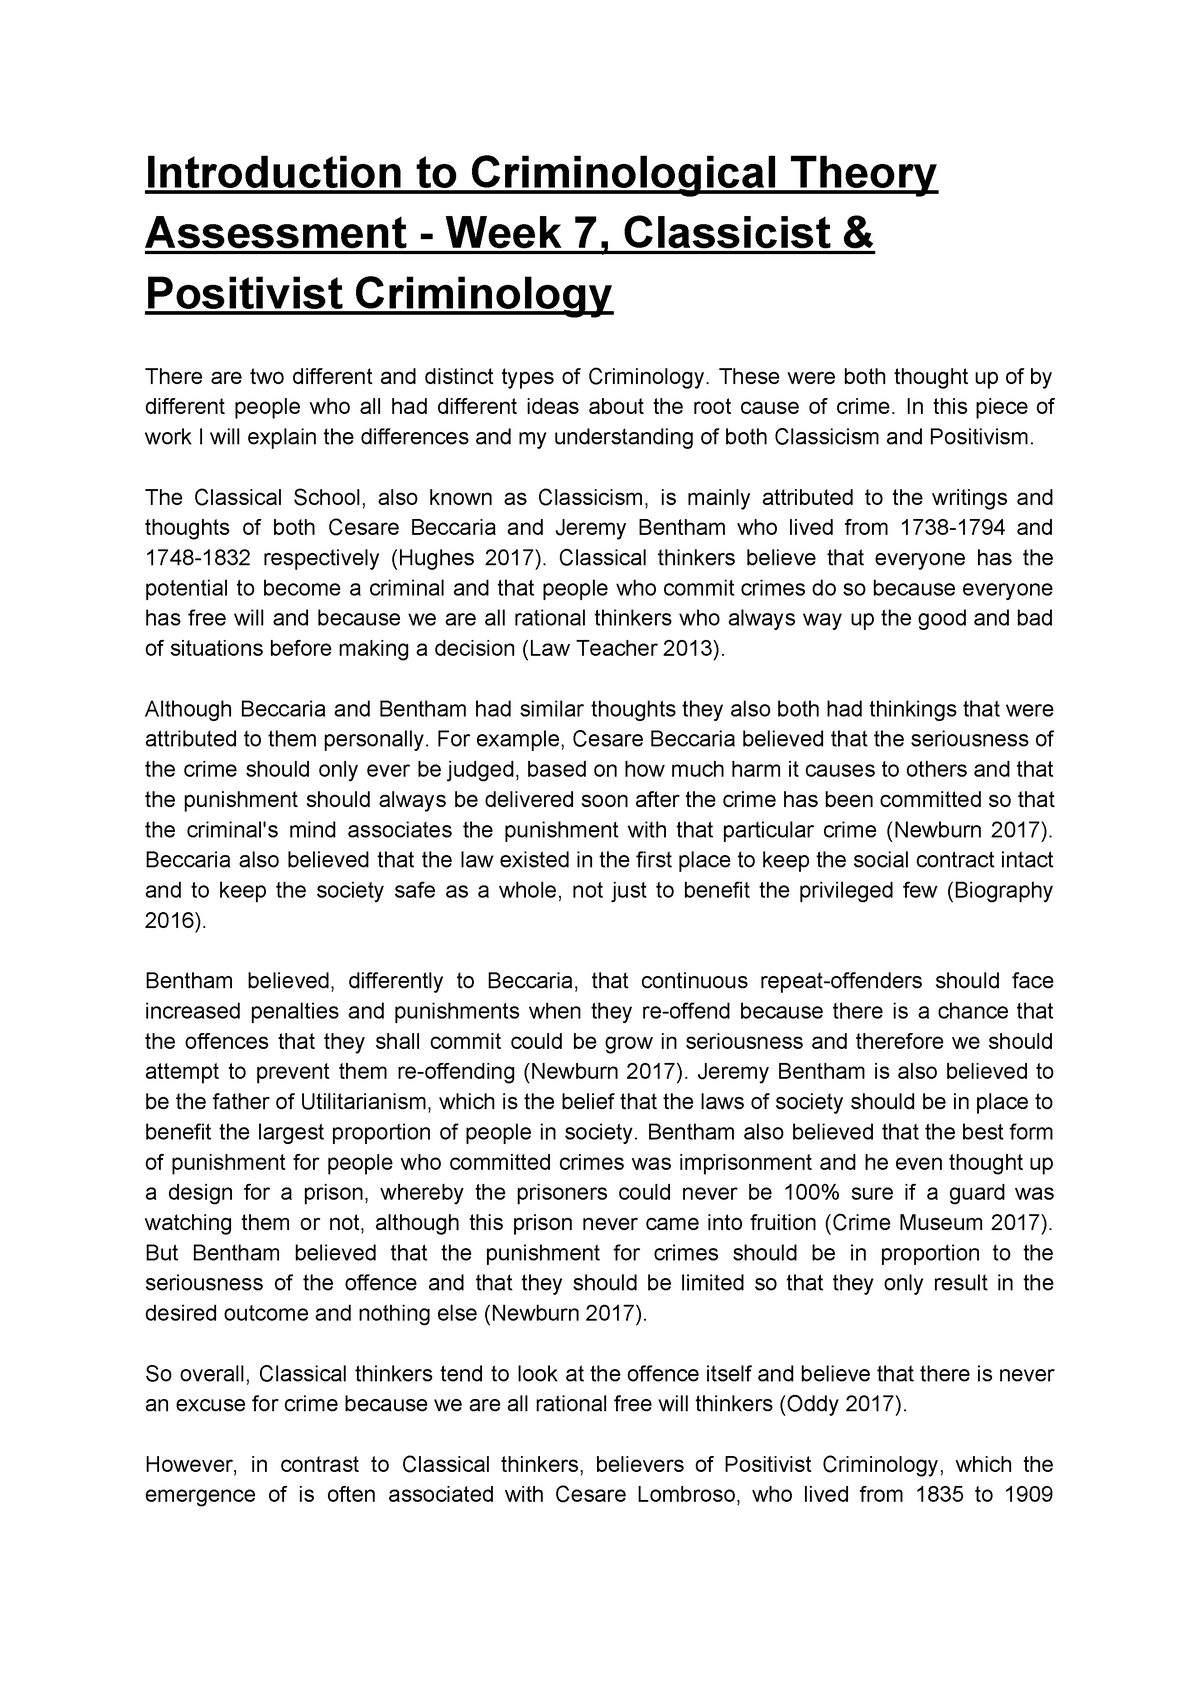 classical and positivist schools of criminology